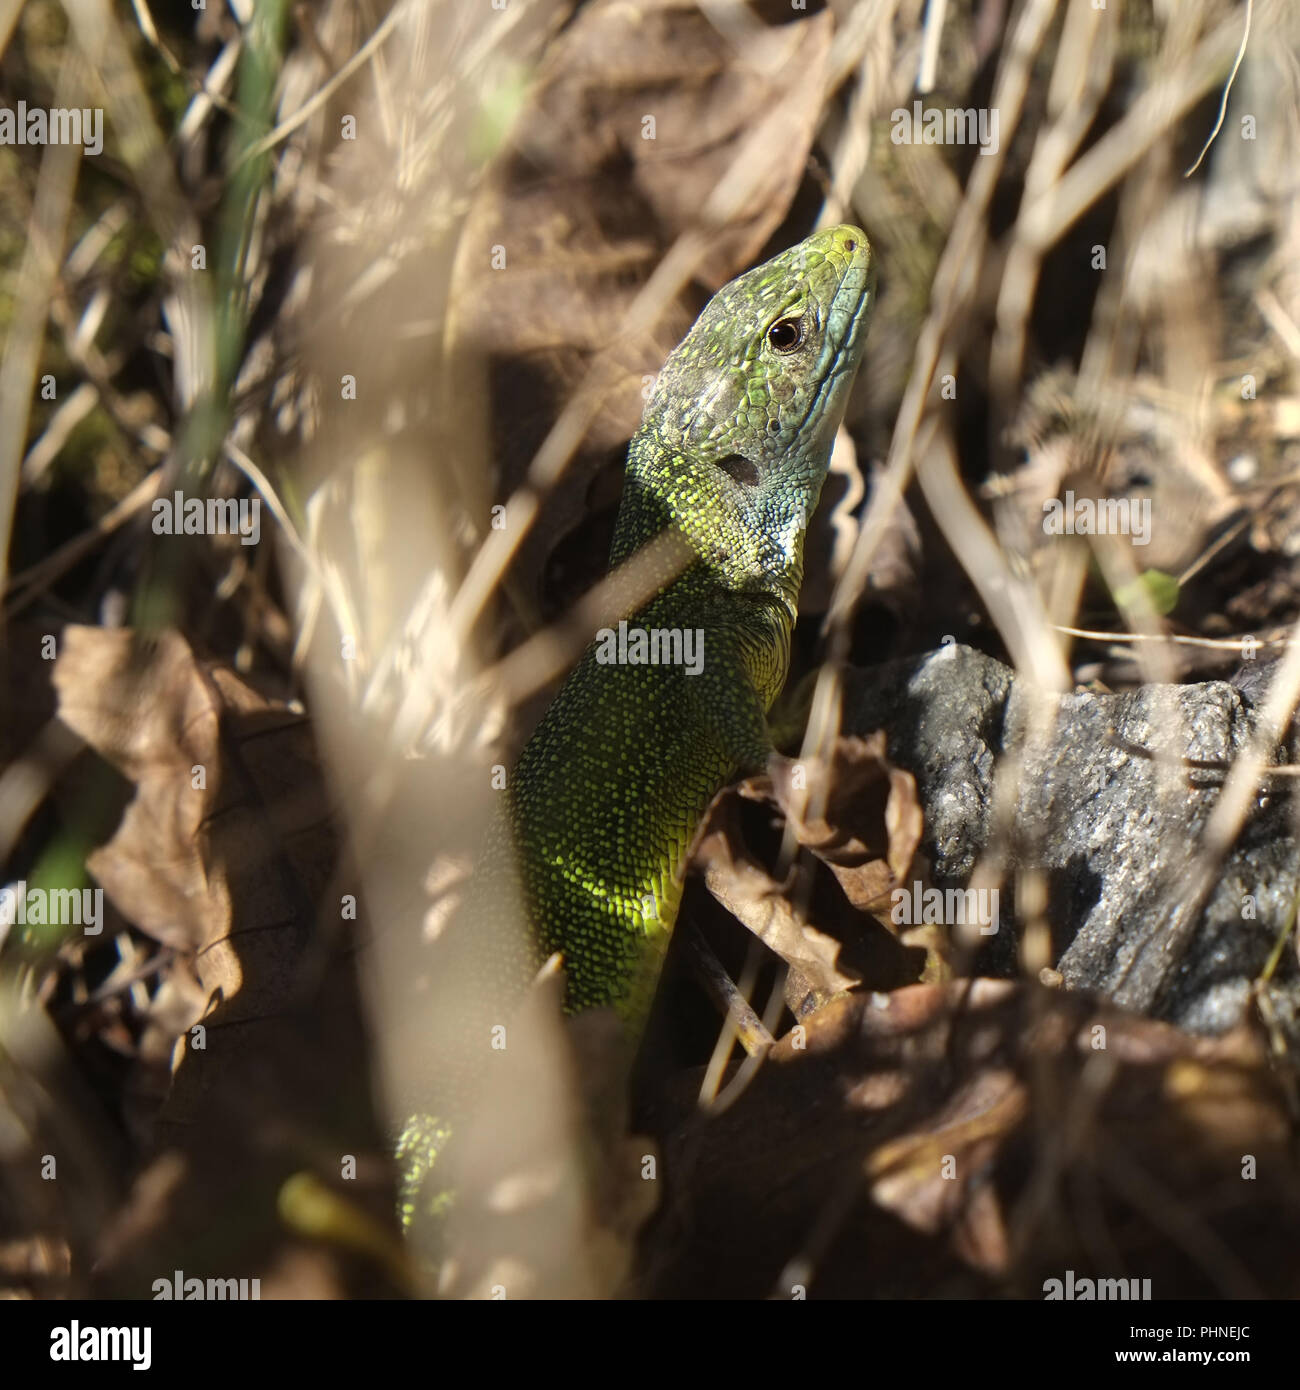 Emerald lizard Stock Photo